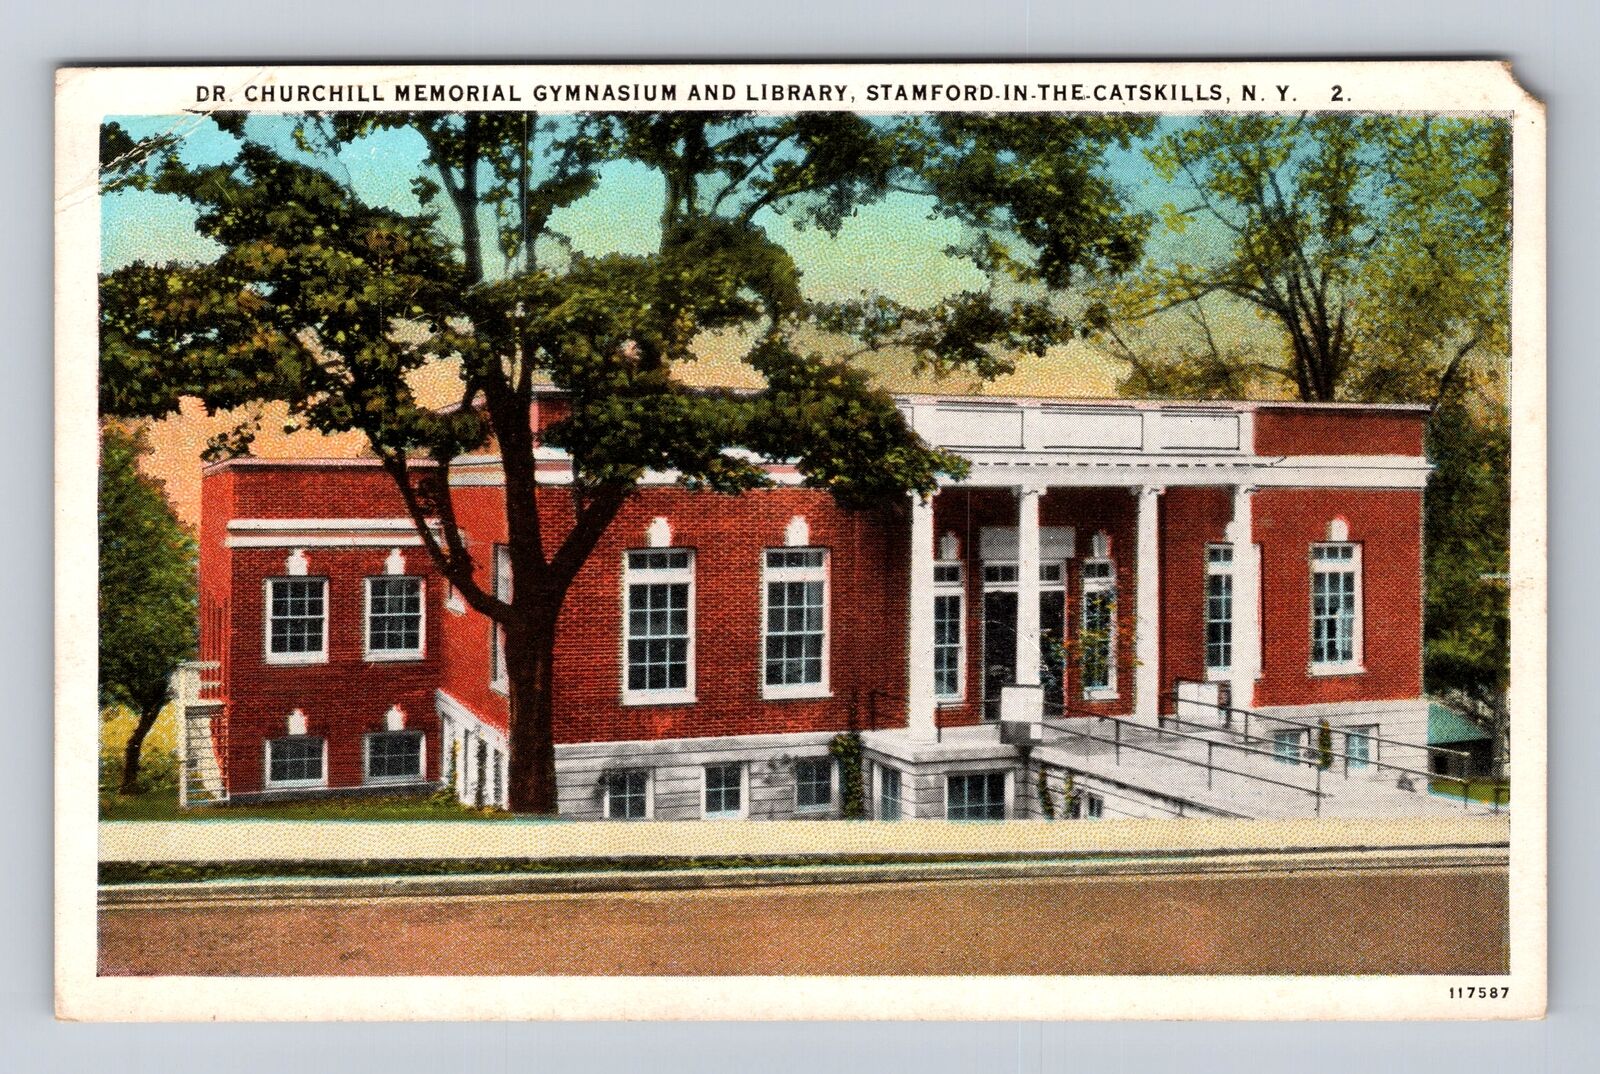 Stamford NY-New York Catskills Dr Churchill Gymnasium & Library Vintage Postcard